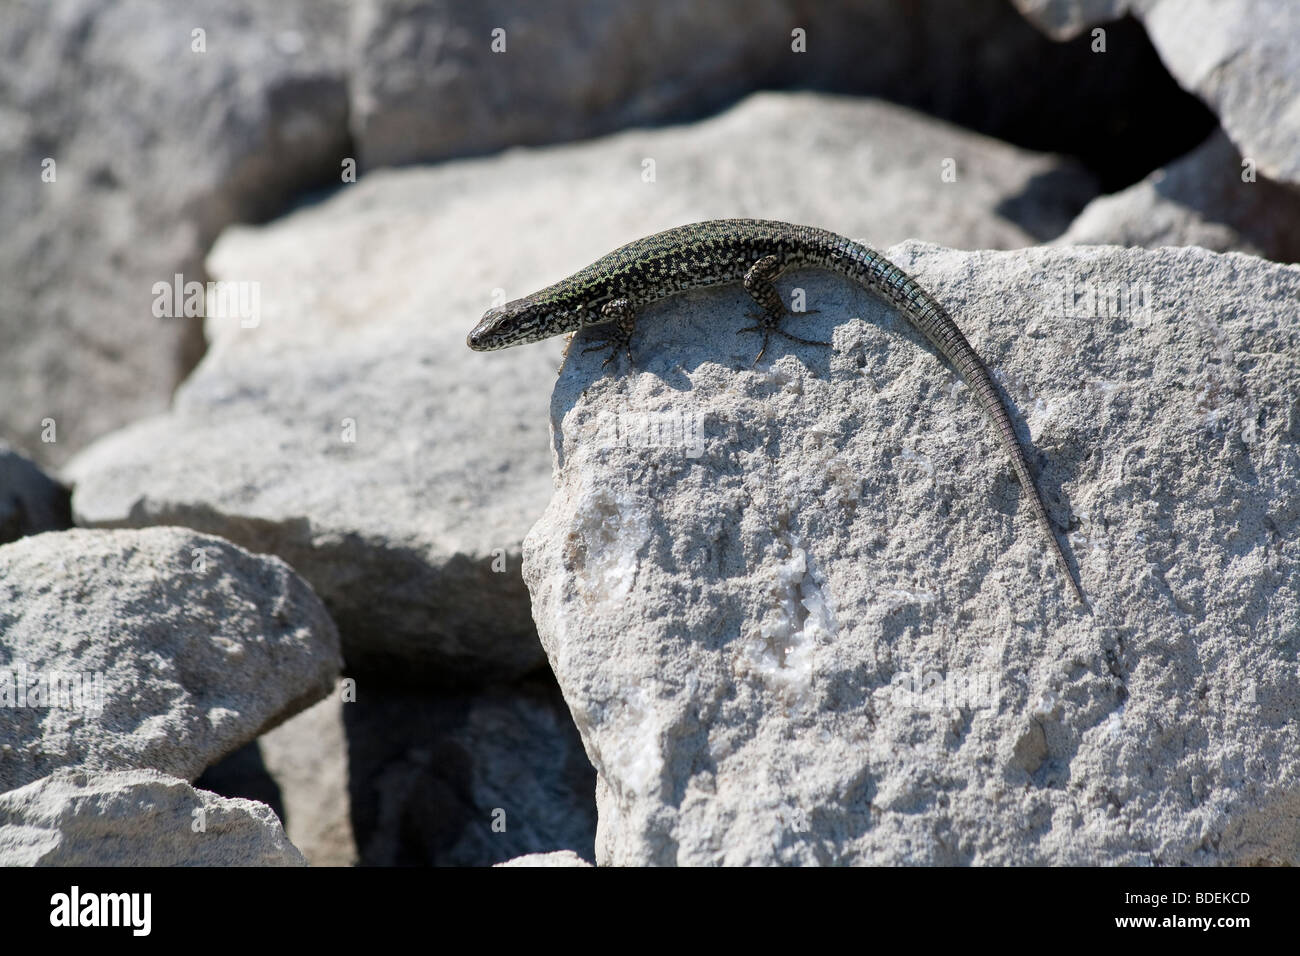 Wall lizard (Podarcis muralis) sunbathing on rocks, Dorset, UK. Stock Photo